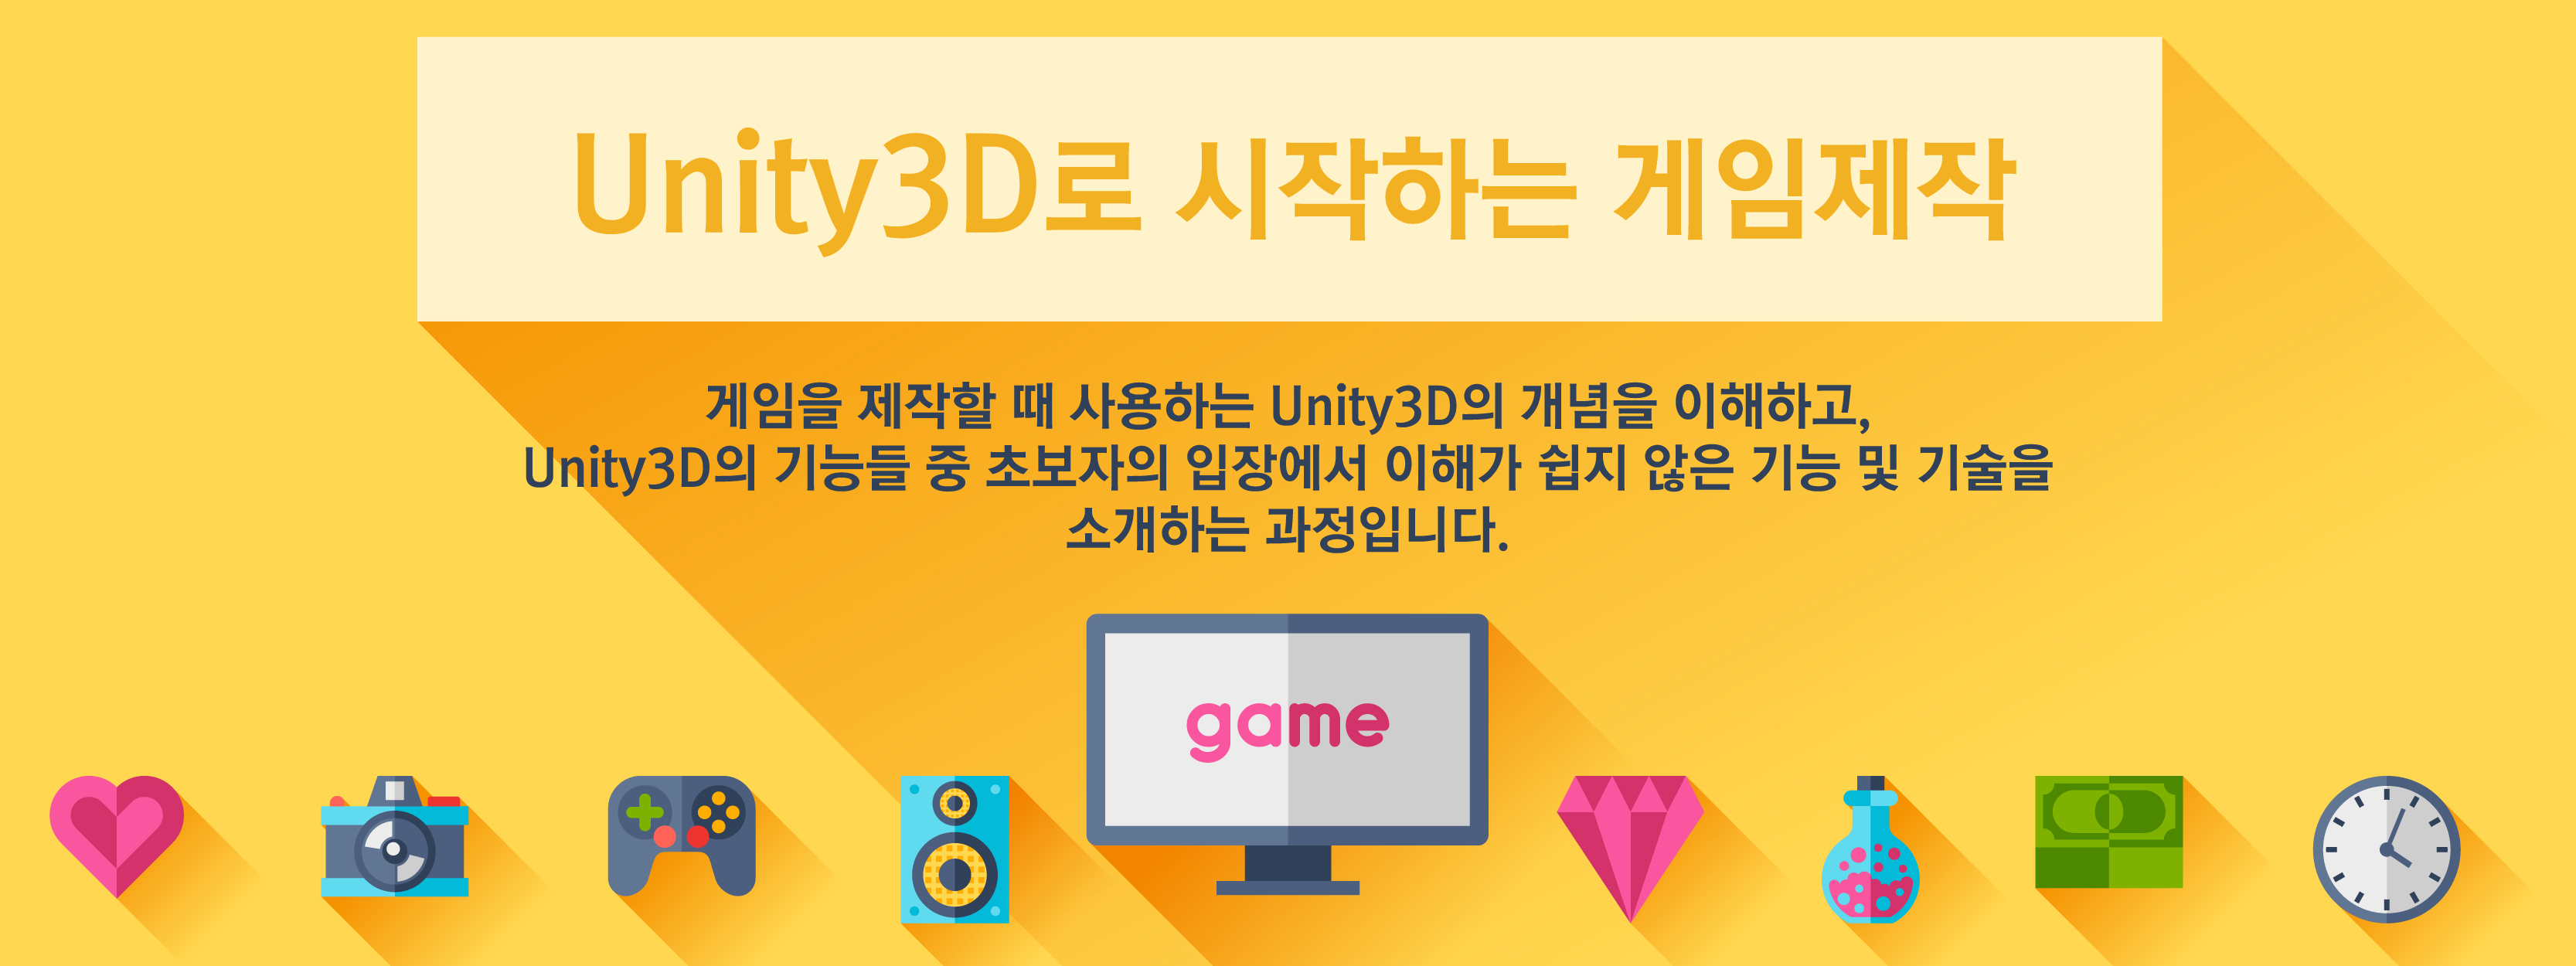 Unity3D로 시작하는 게임 제작게임을 제작할 때 사용하는 Unity3D의 개념을 이해하고, Unity3D의 기능들 중 초보자의 입장에서 이해가 쉽지 않은 기능 및 기술을 소개하는 과정입니다.